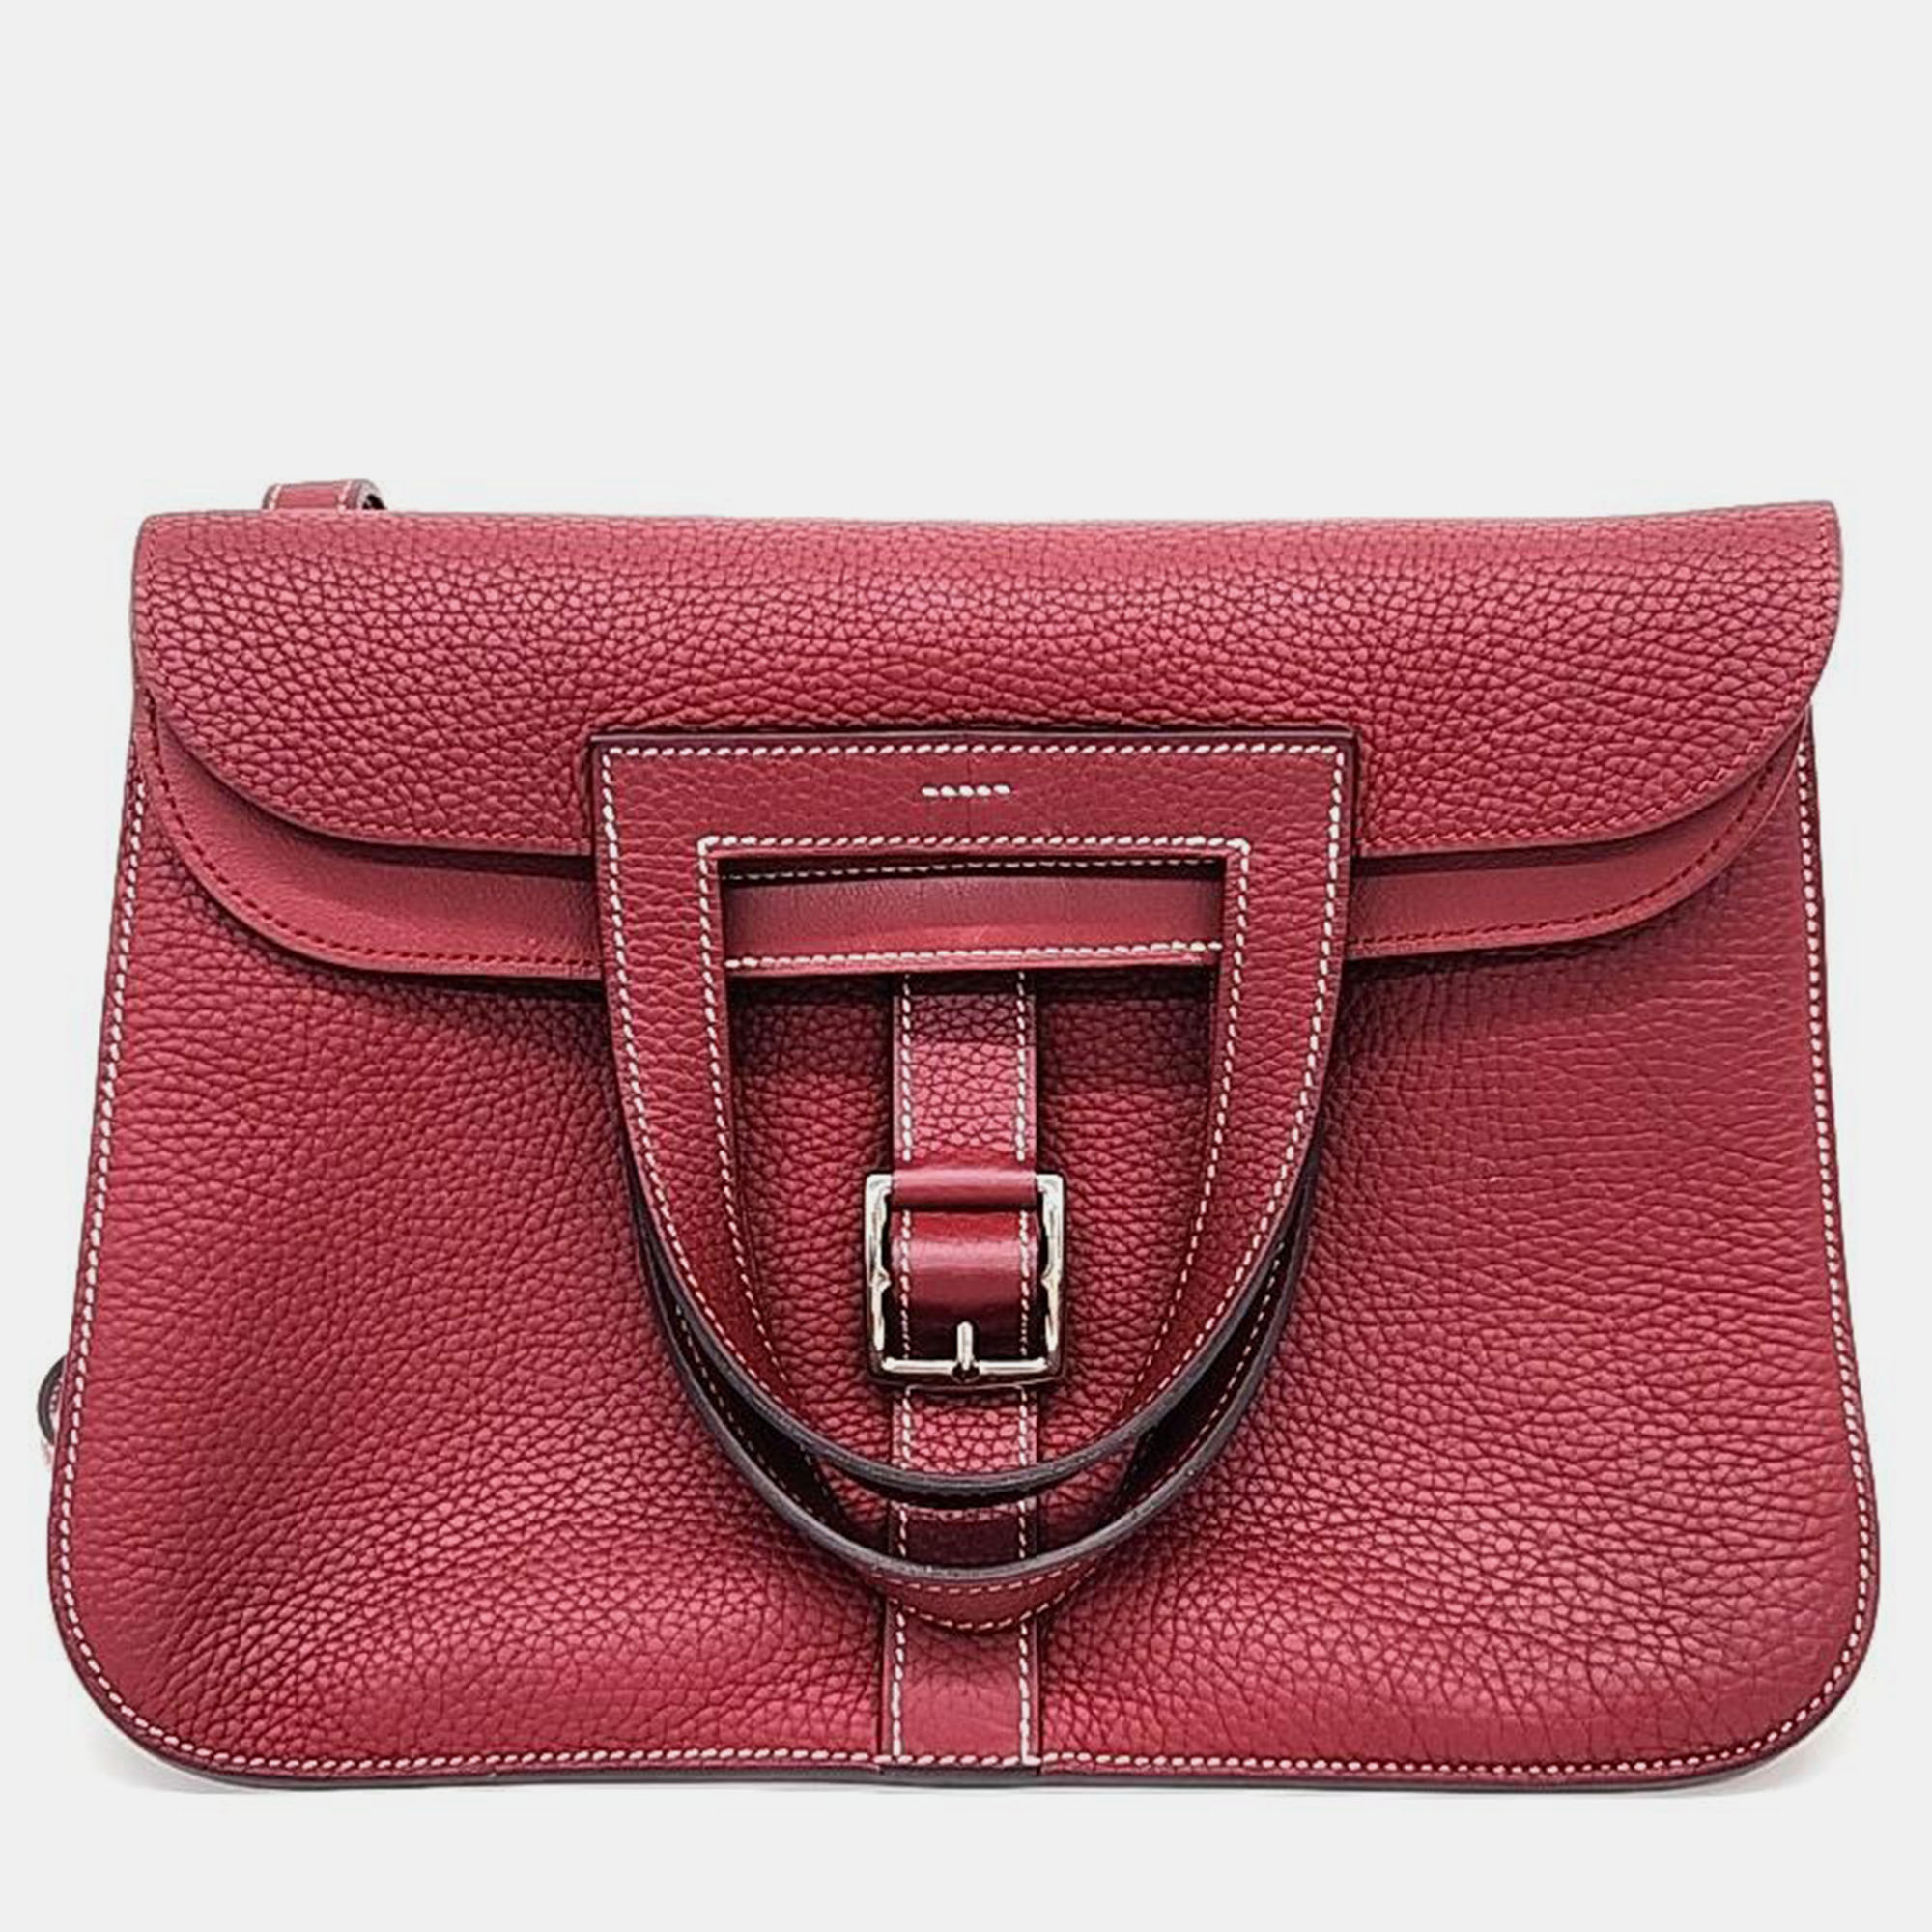 Hermes leather red halzan bag